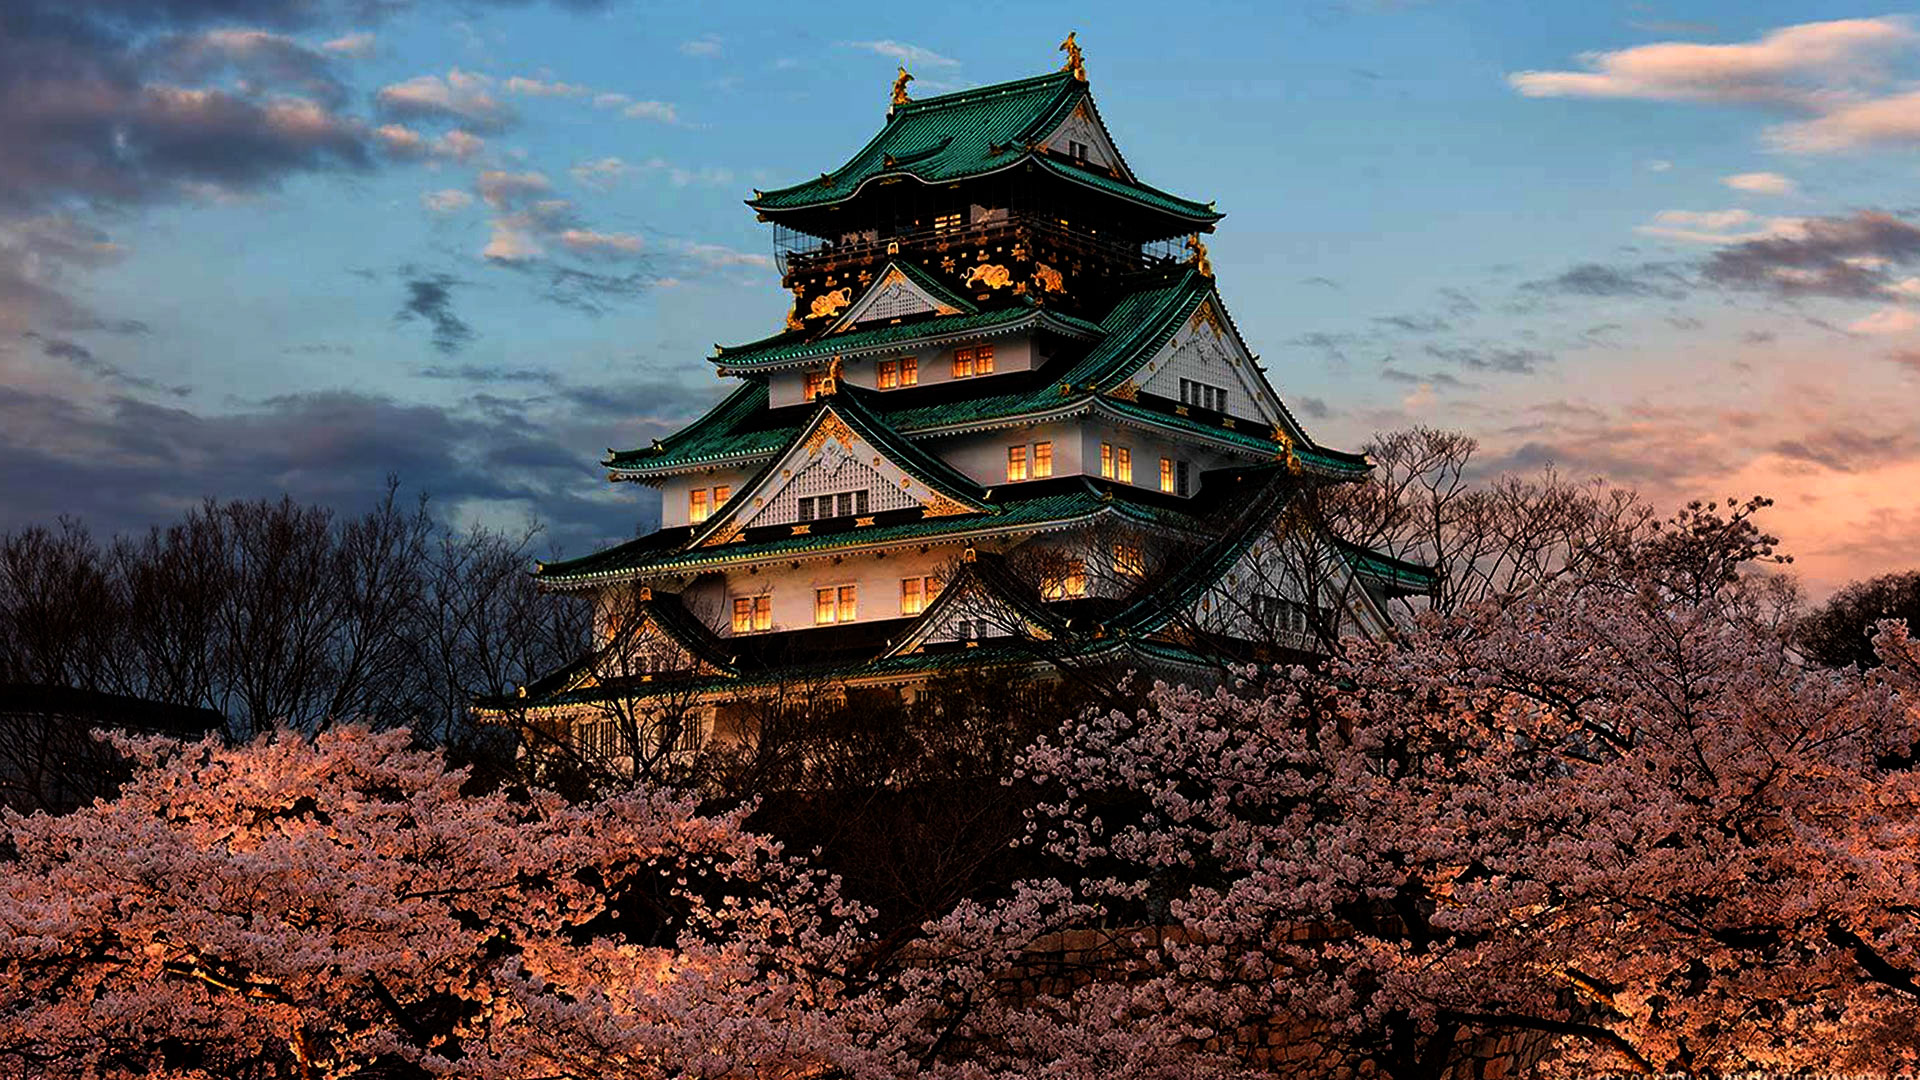 Japan Image Osaka HD Wallpaper And Background Photos